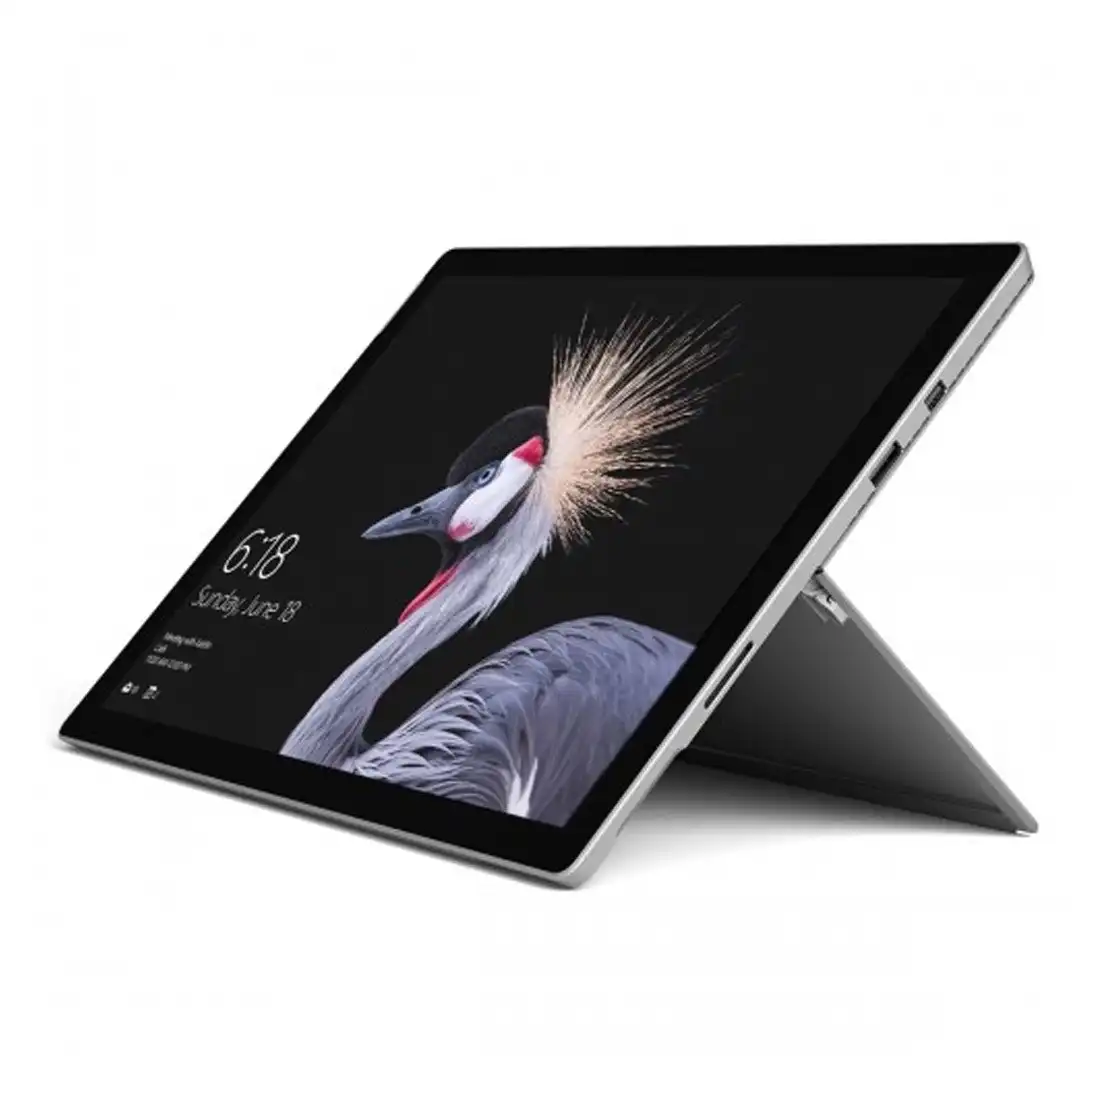 Microsoft Surface Pro (6th Gen) 12.3", i5-8250U, 128GB/8GB Platinum [Refurbished] - As New